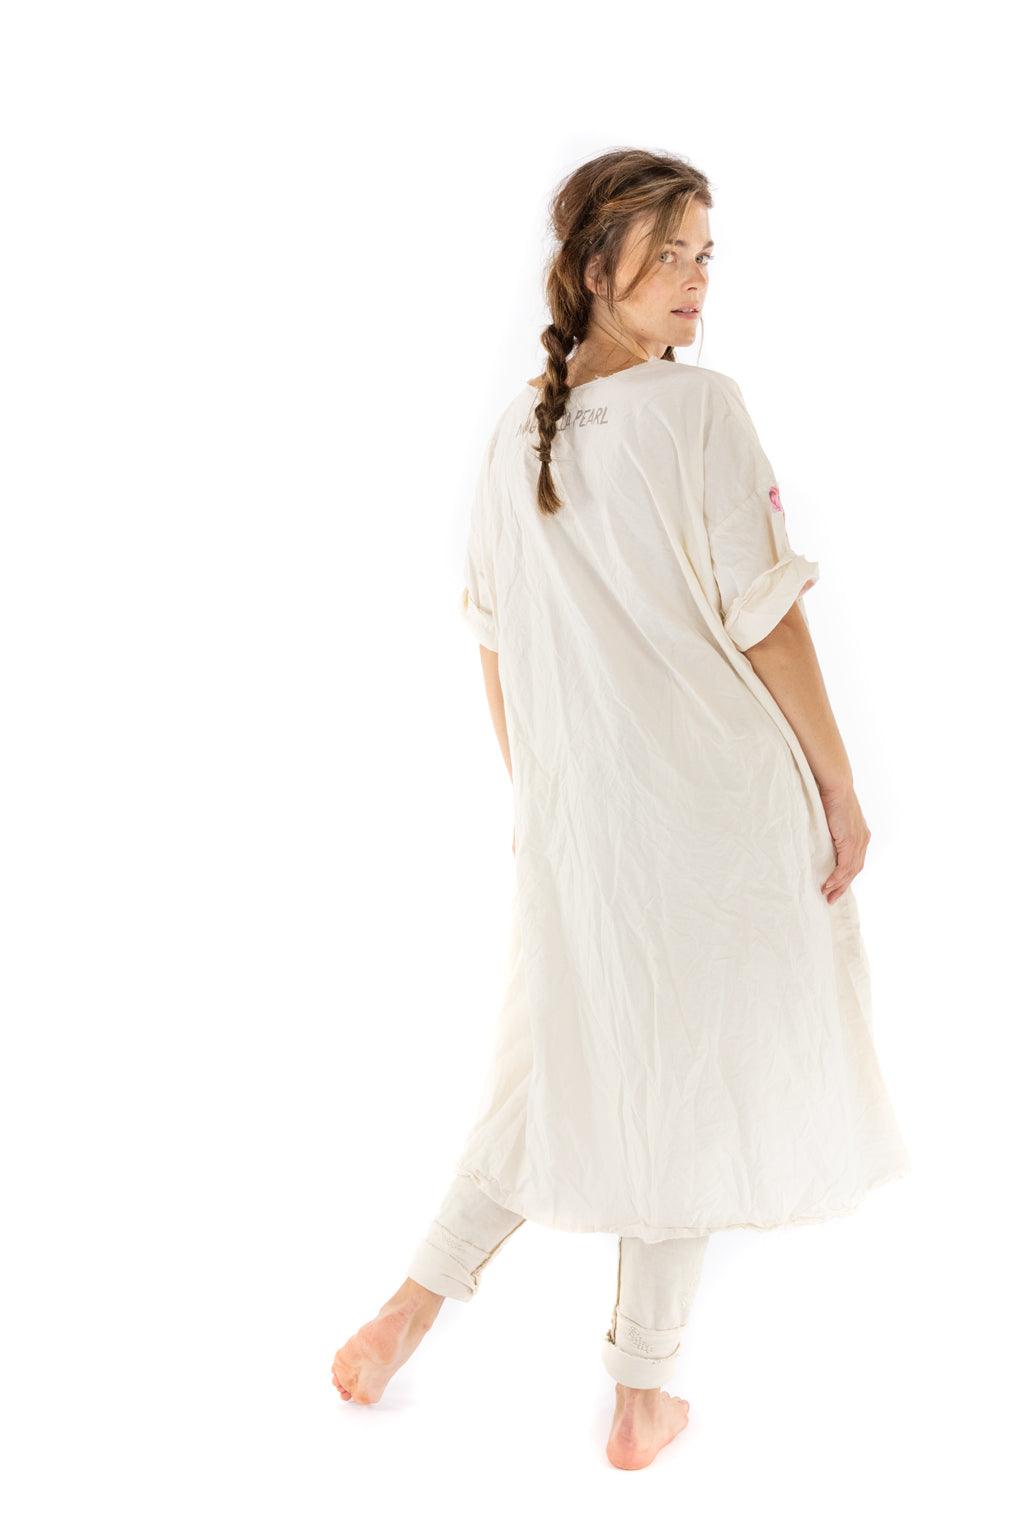 Amor Artist Smock Dress - Magnolia Pearl Clothing